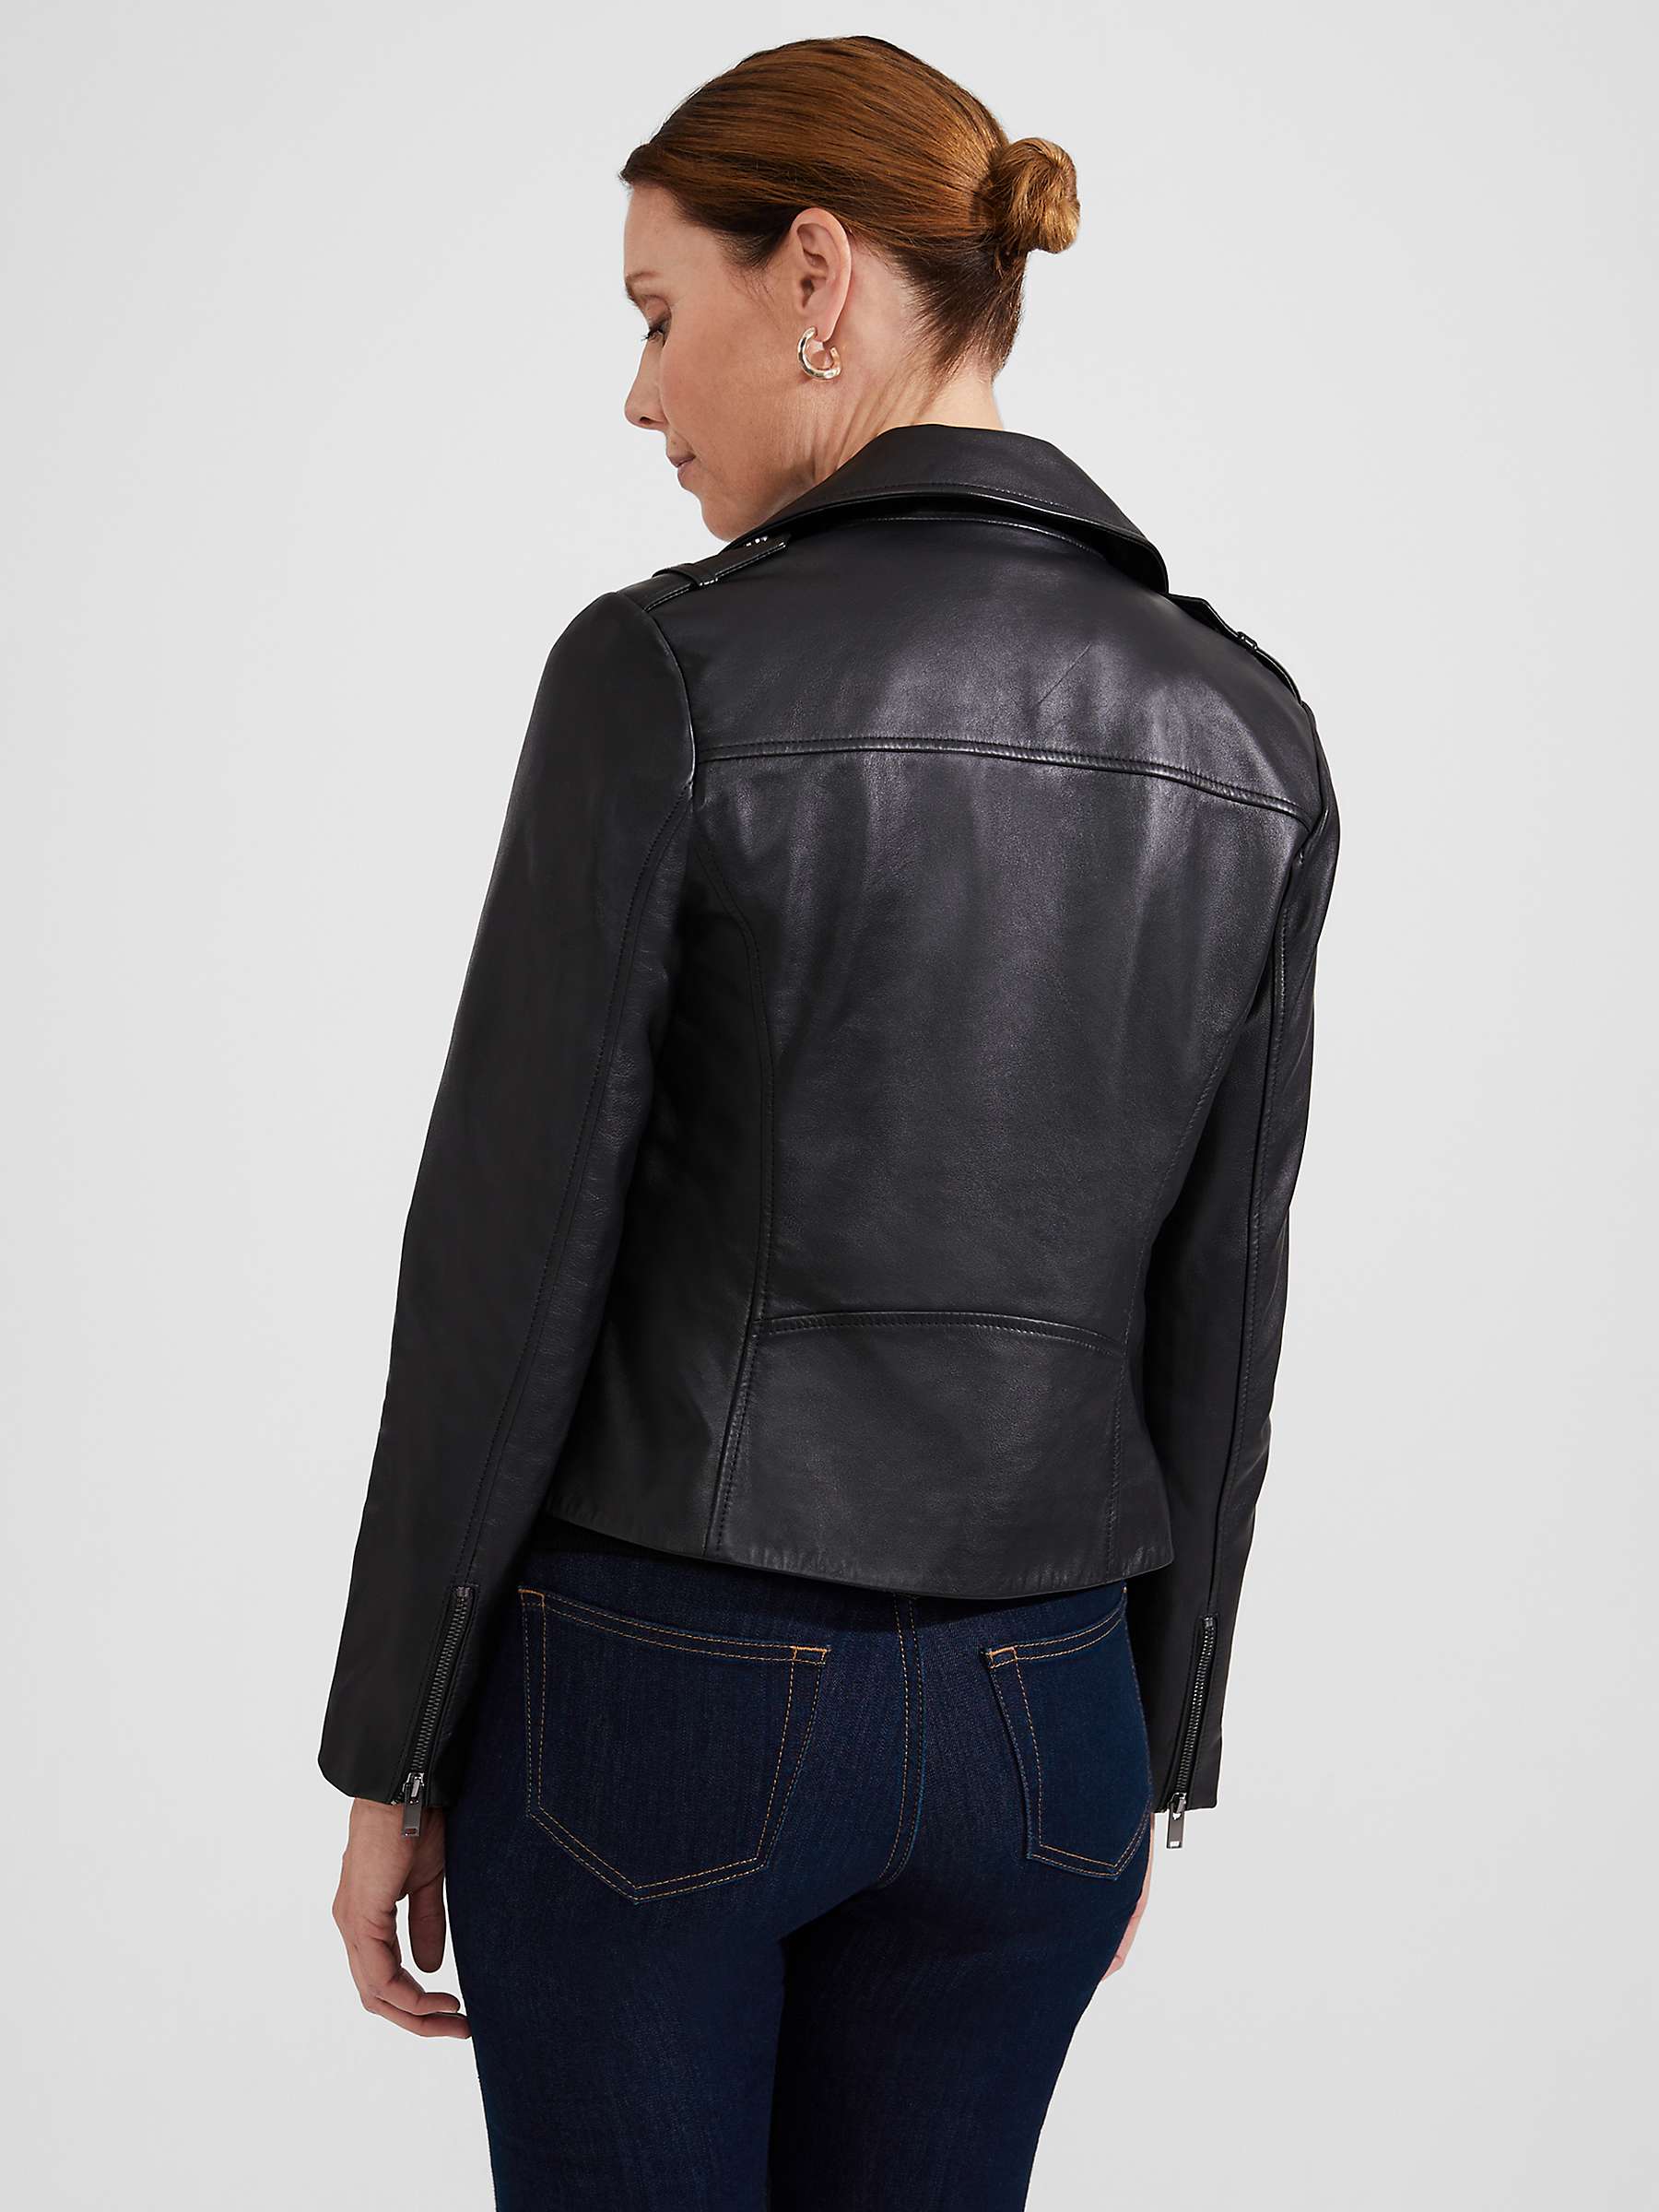 Hobbs Darby Leather Jacket, Black at John Lewis & Partners